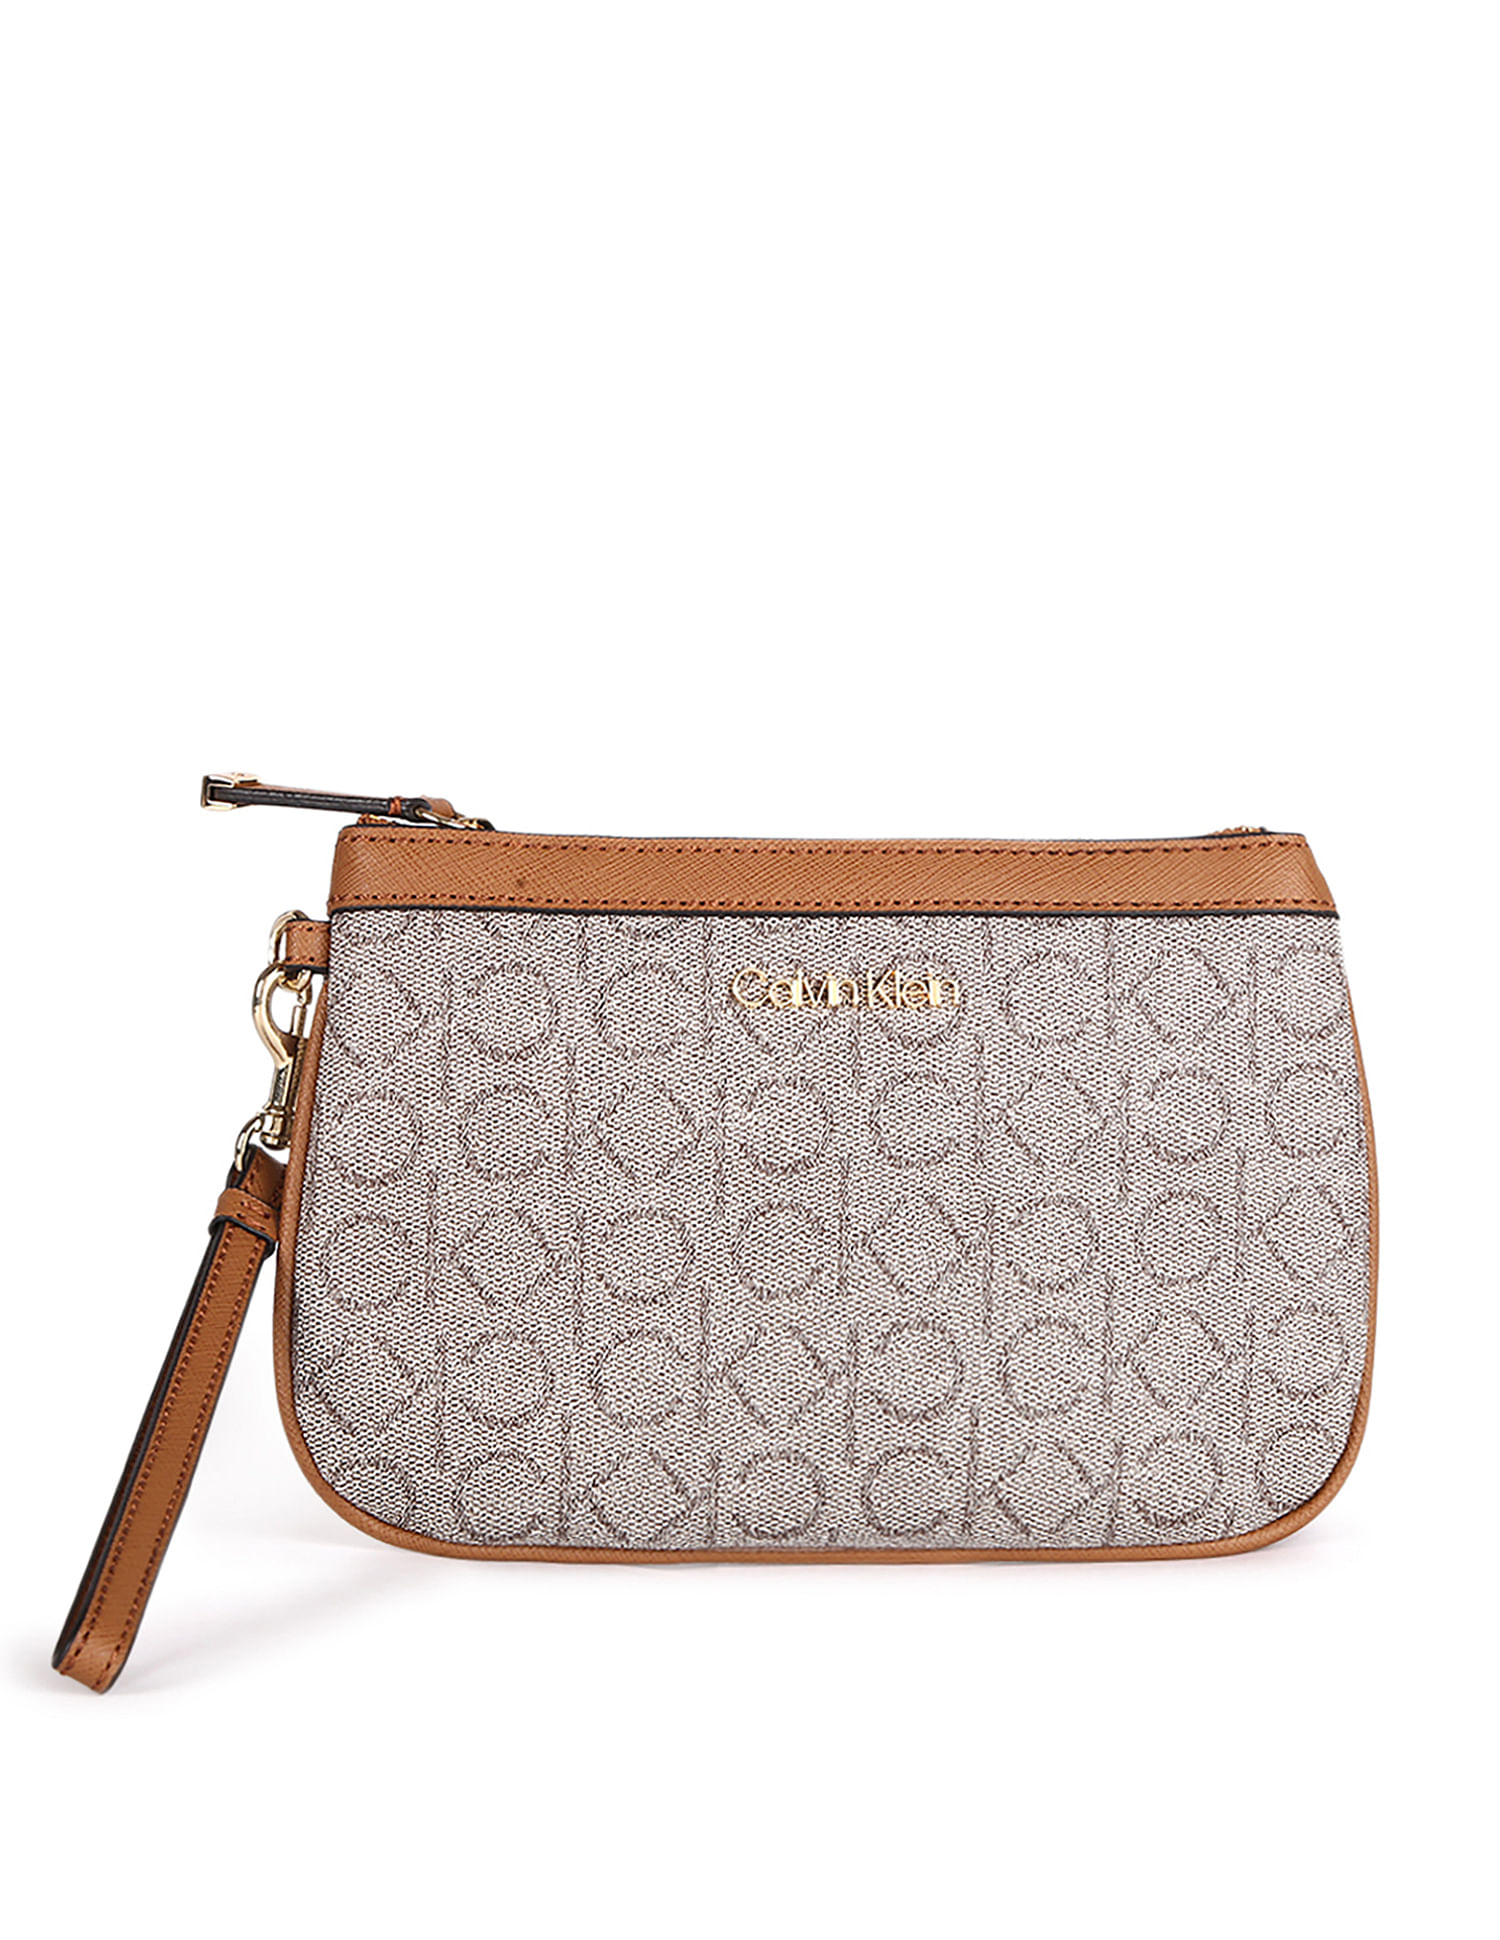 Real vs Fake Calvin Klein wallet review. How to spot counterfeit Calvin  Klein purse and bag - YouTube